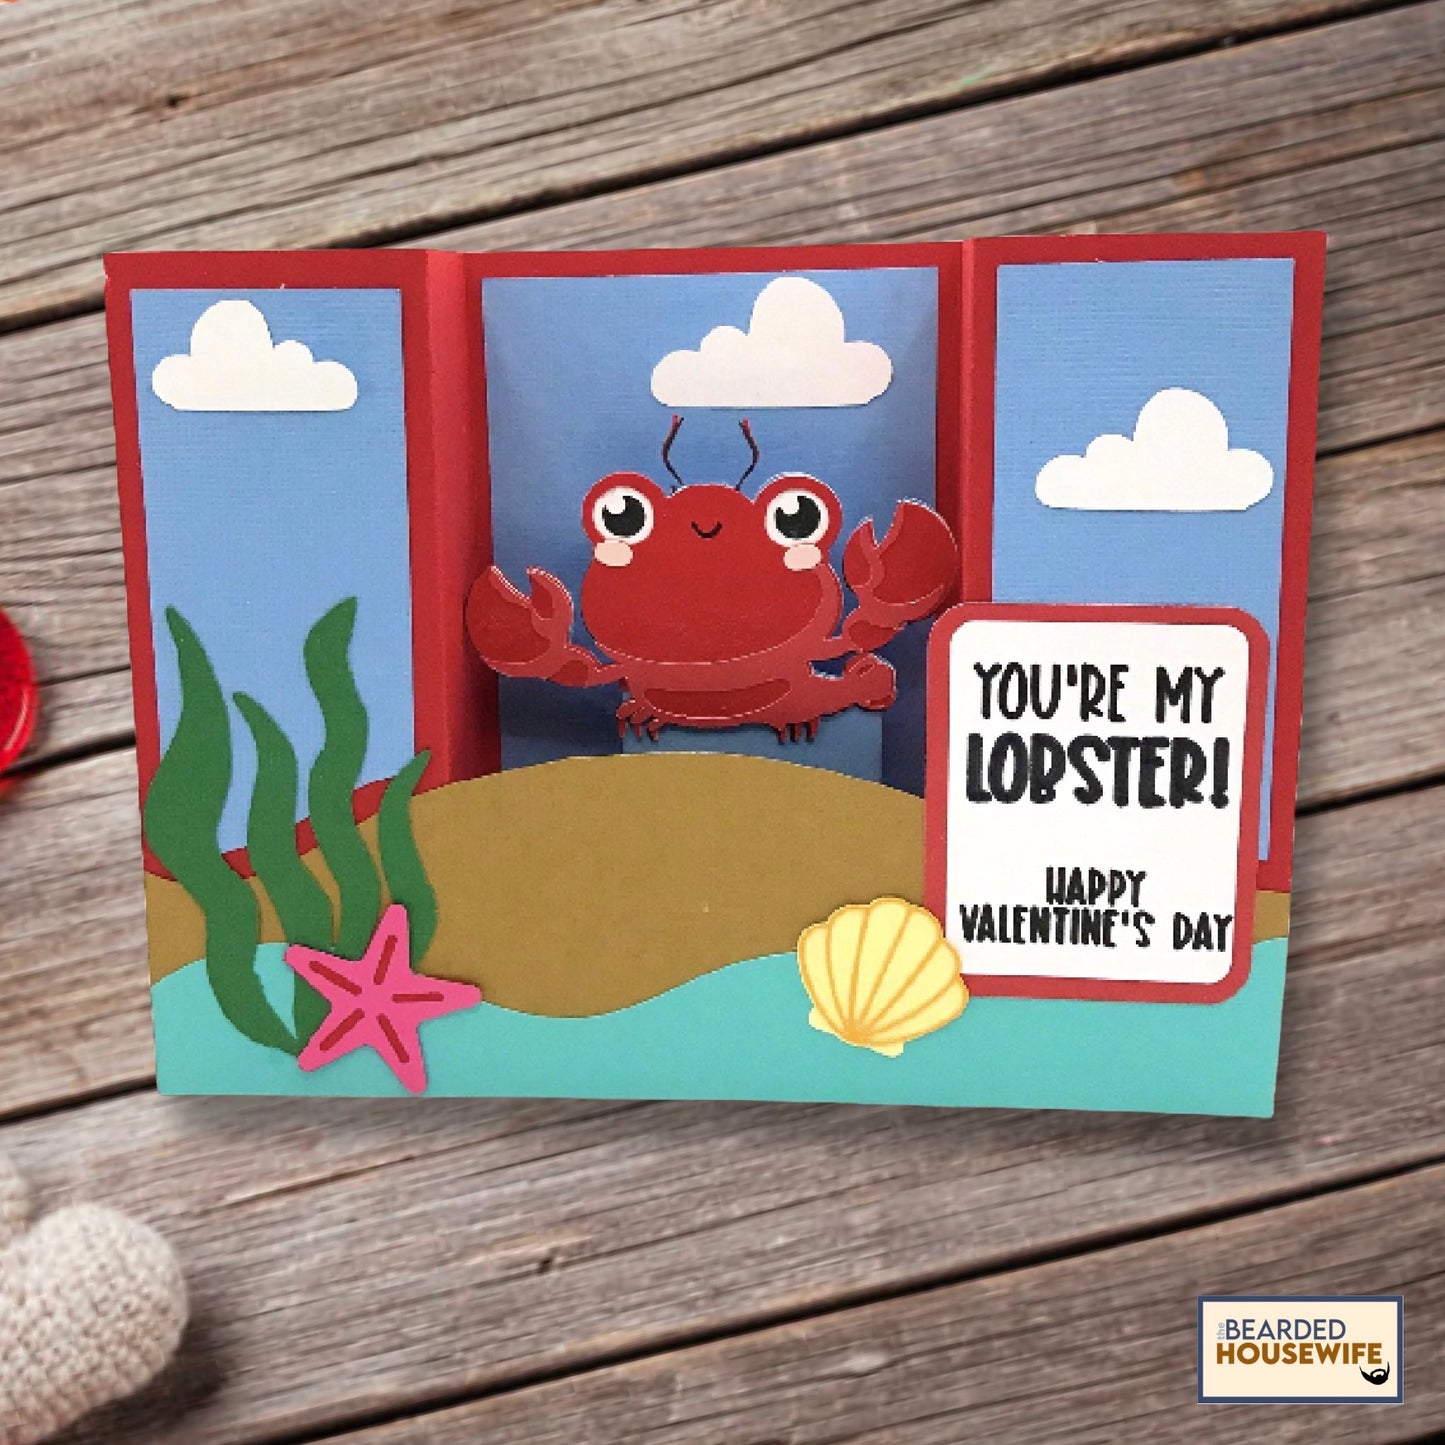 My Lobster Valentine Bridge Card